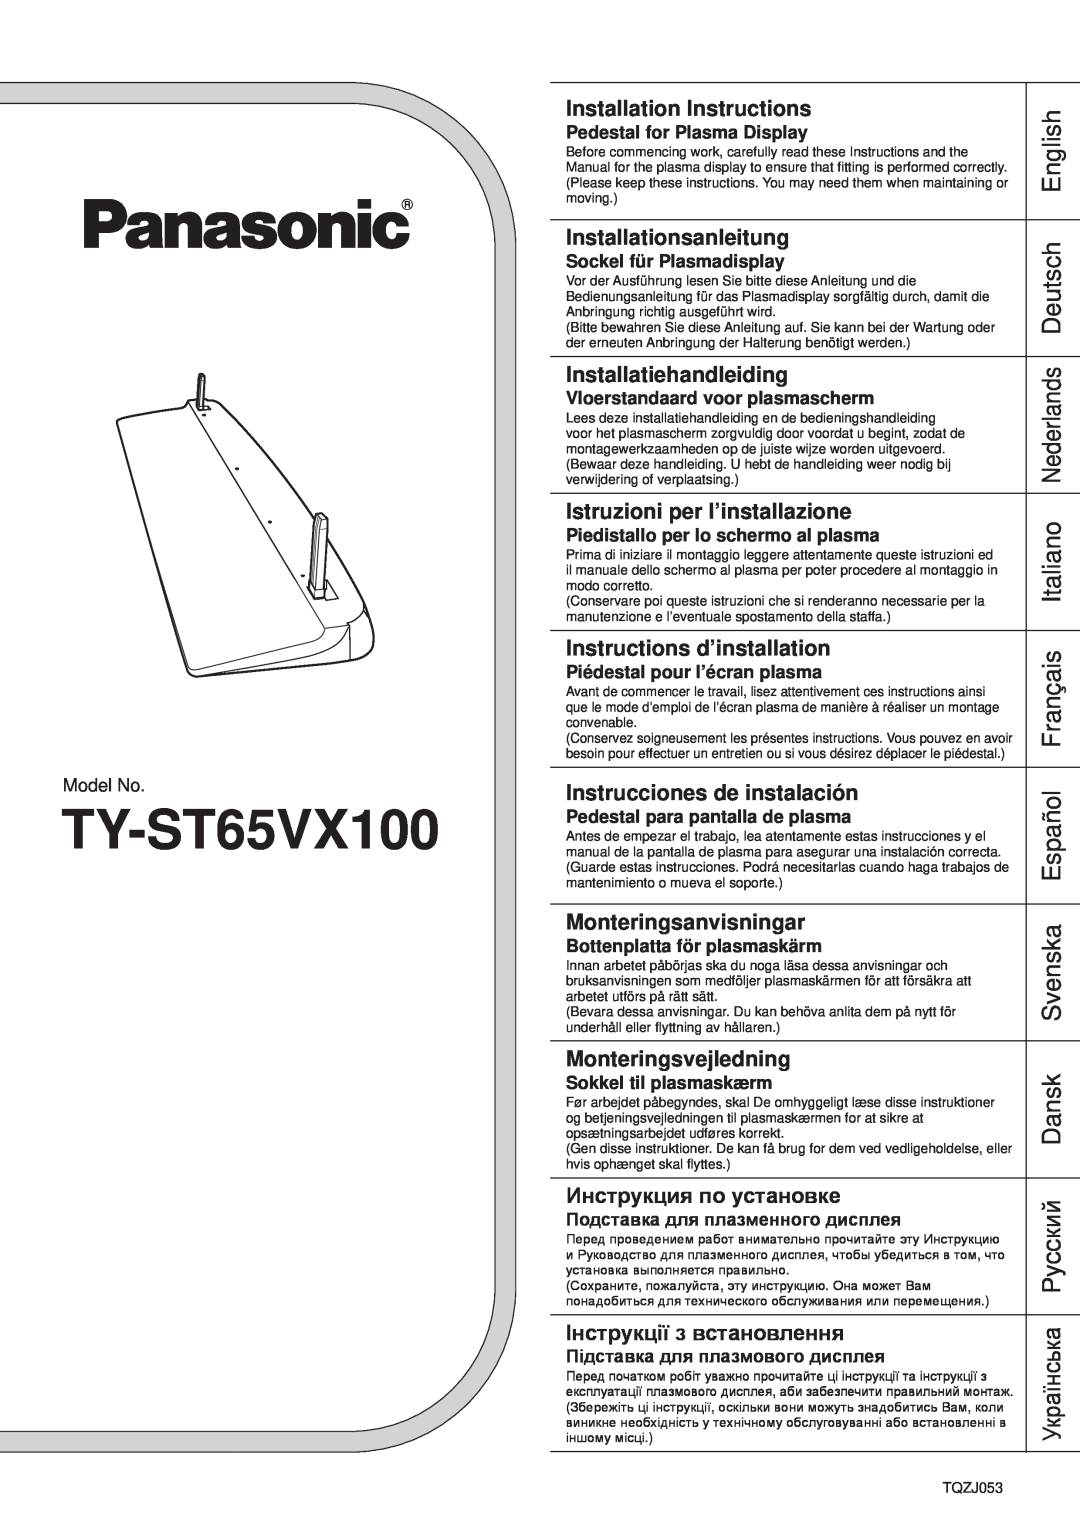 Panasonic TY-ST65VX100 installation instructions 